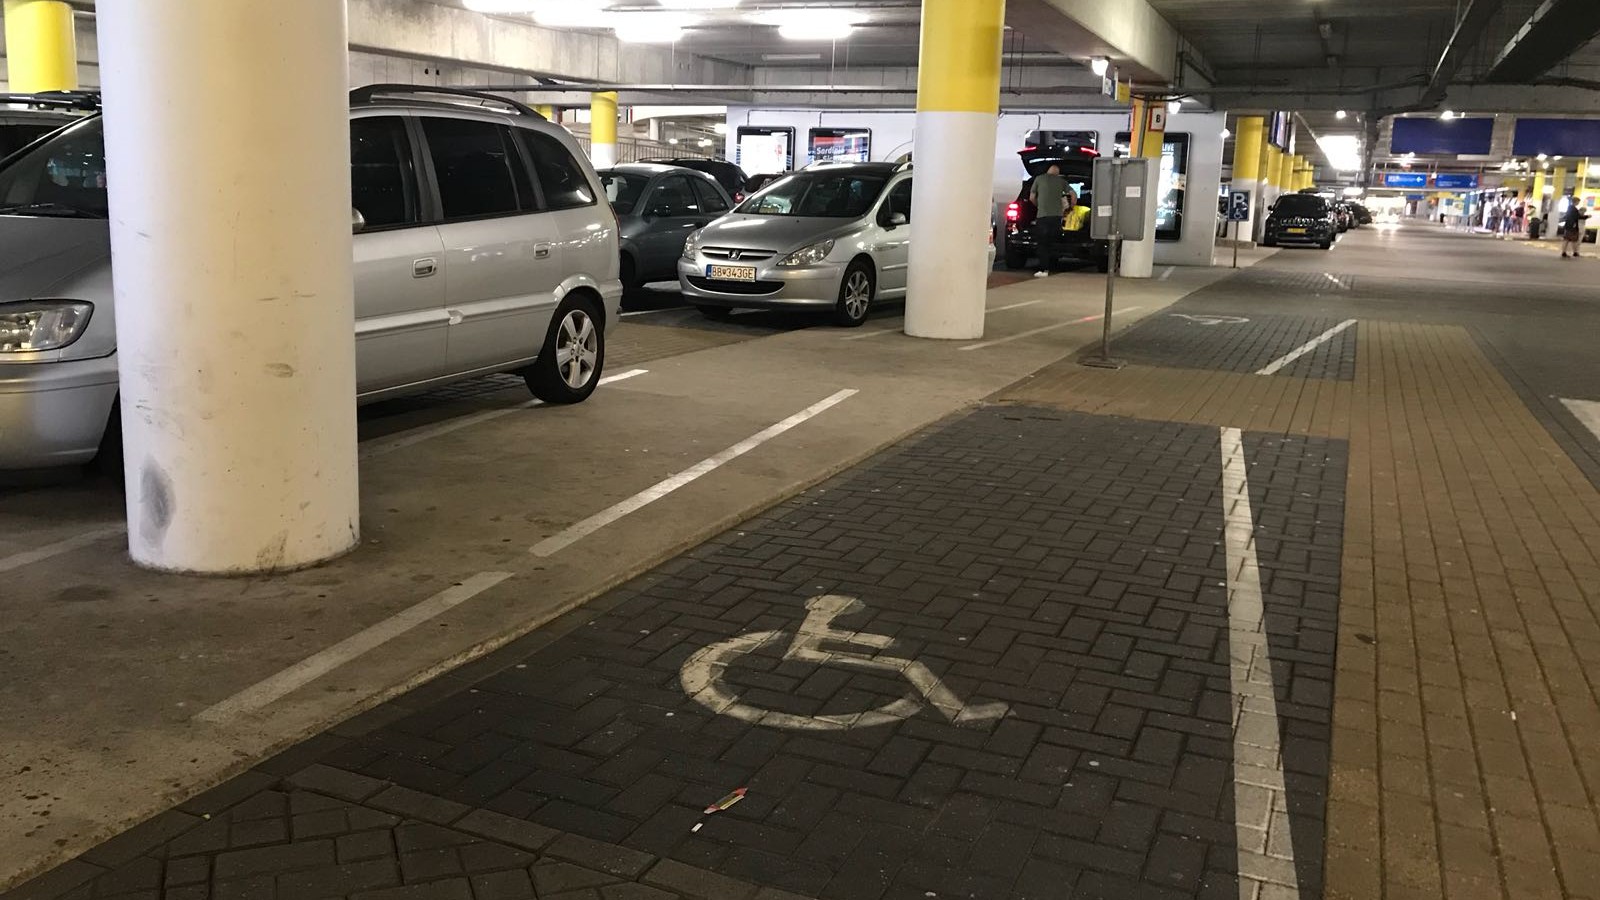 invalidenparkeerplaats, arena, mindervaliden, parkeerplaats, arena, p1, 18 augustus 2018